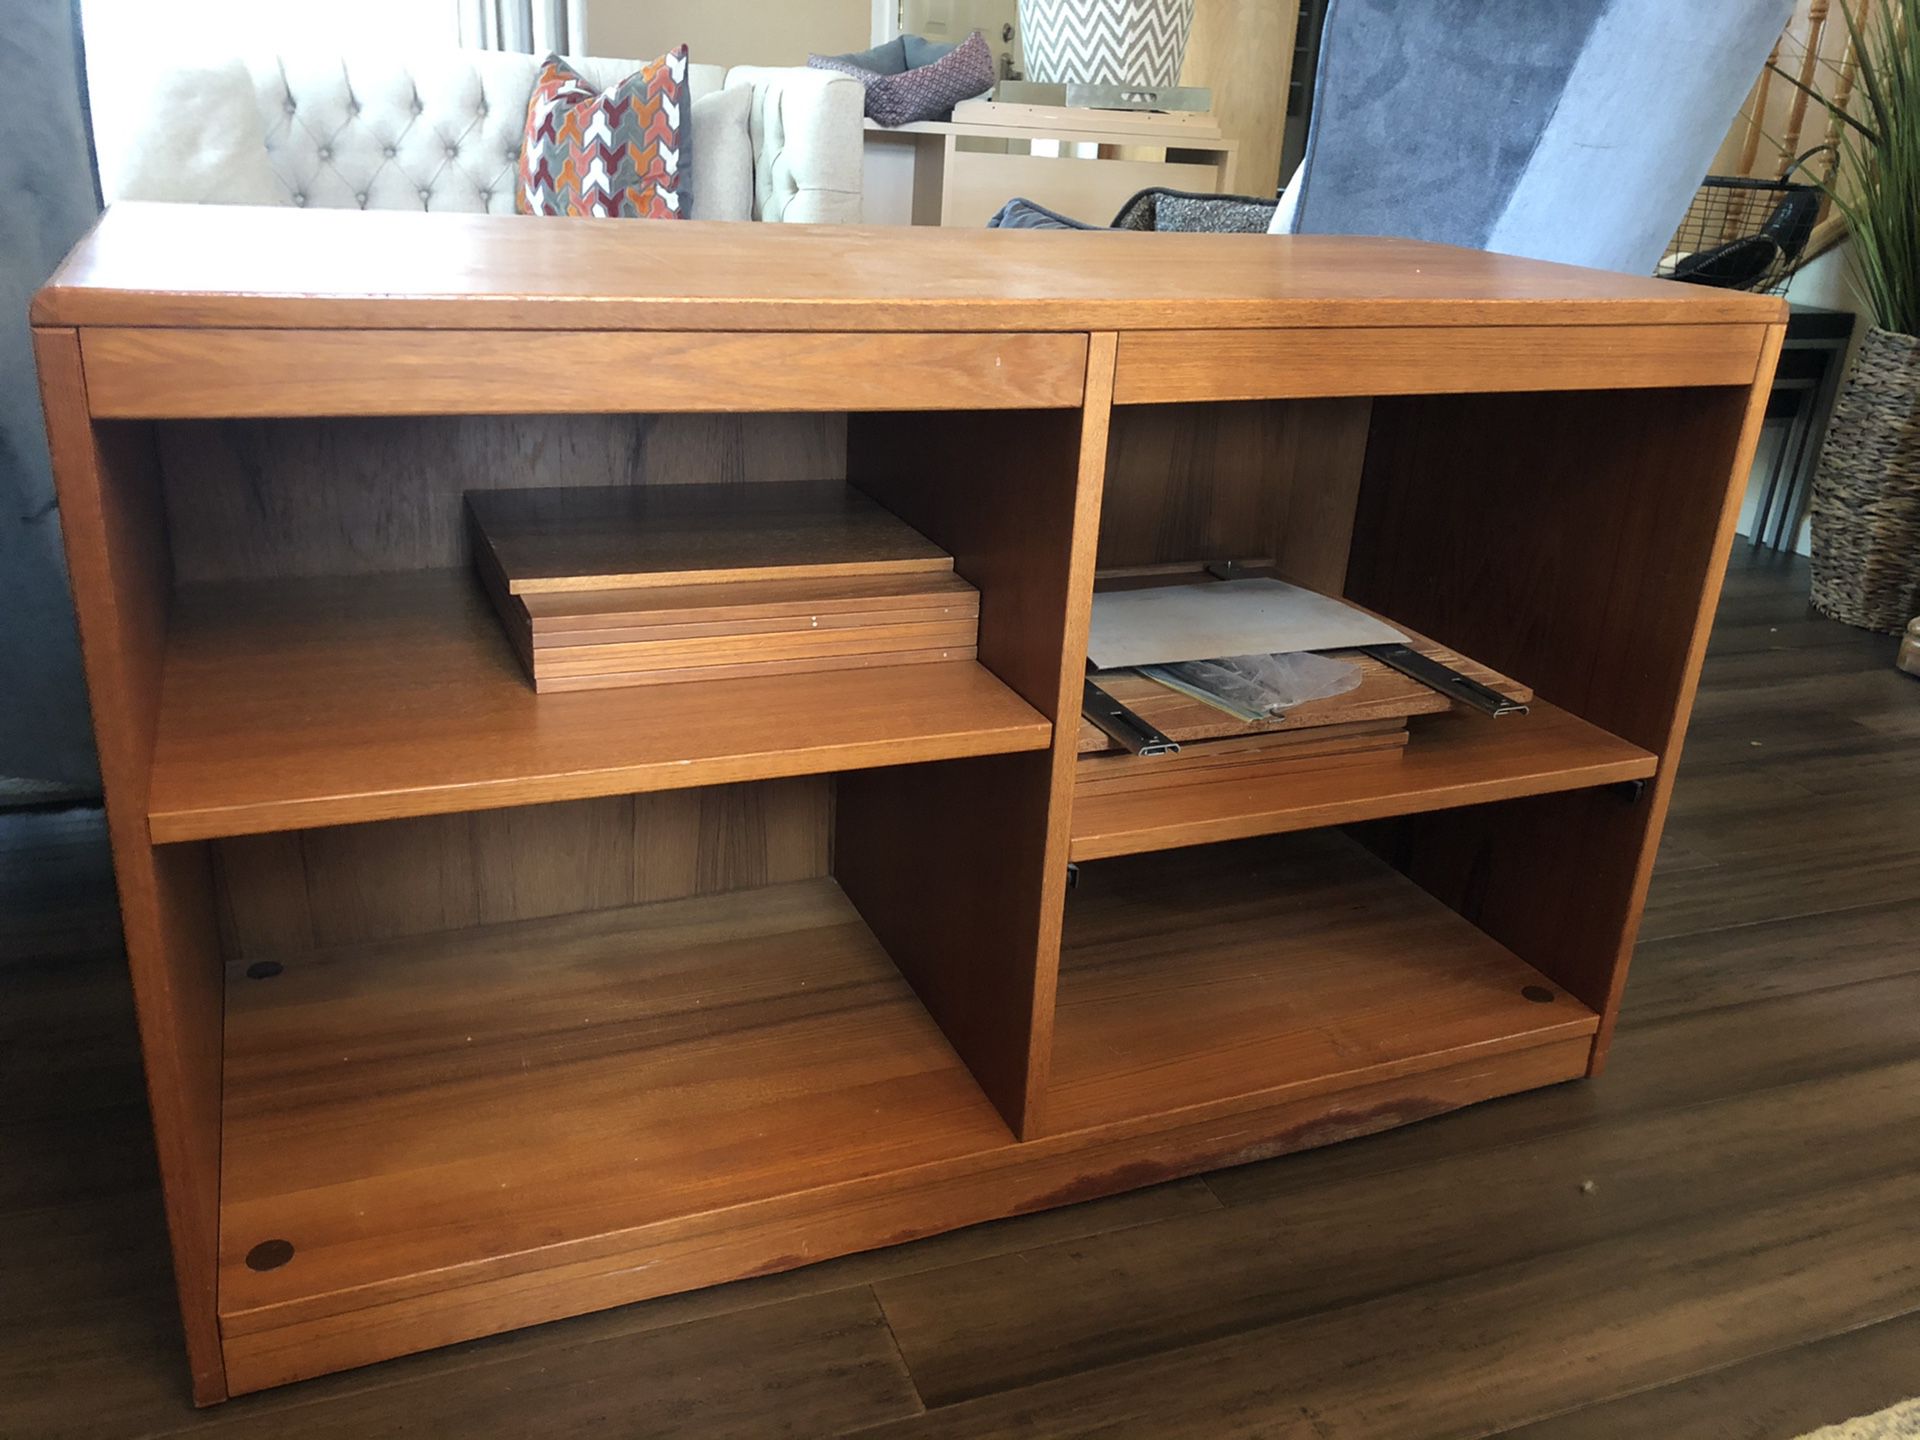 Wood entertainment unit/storage shelf